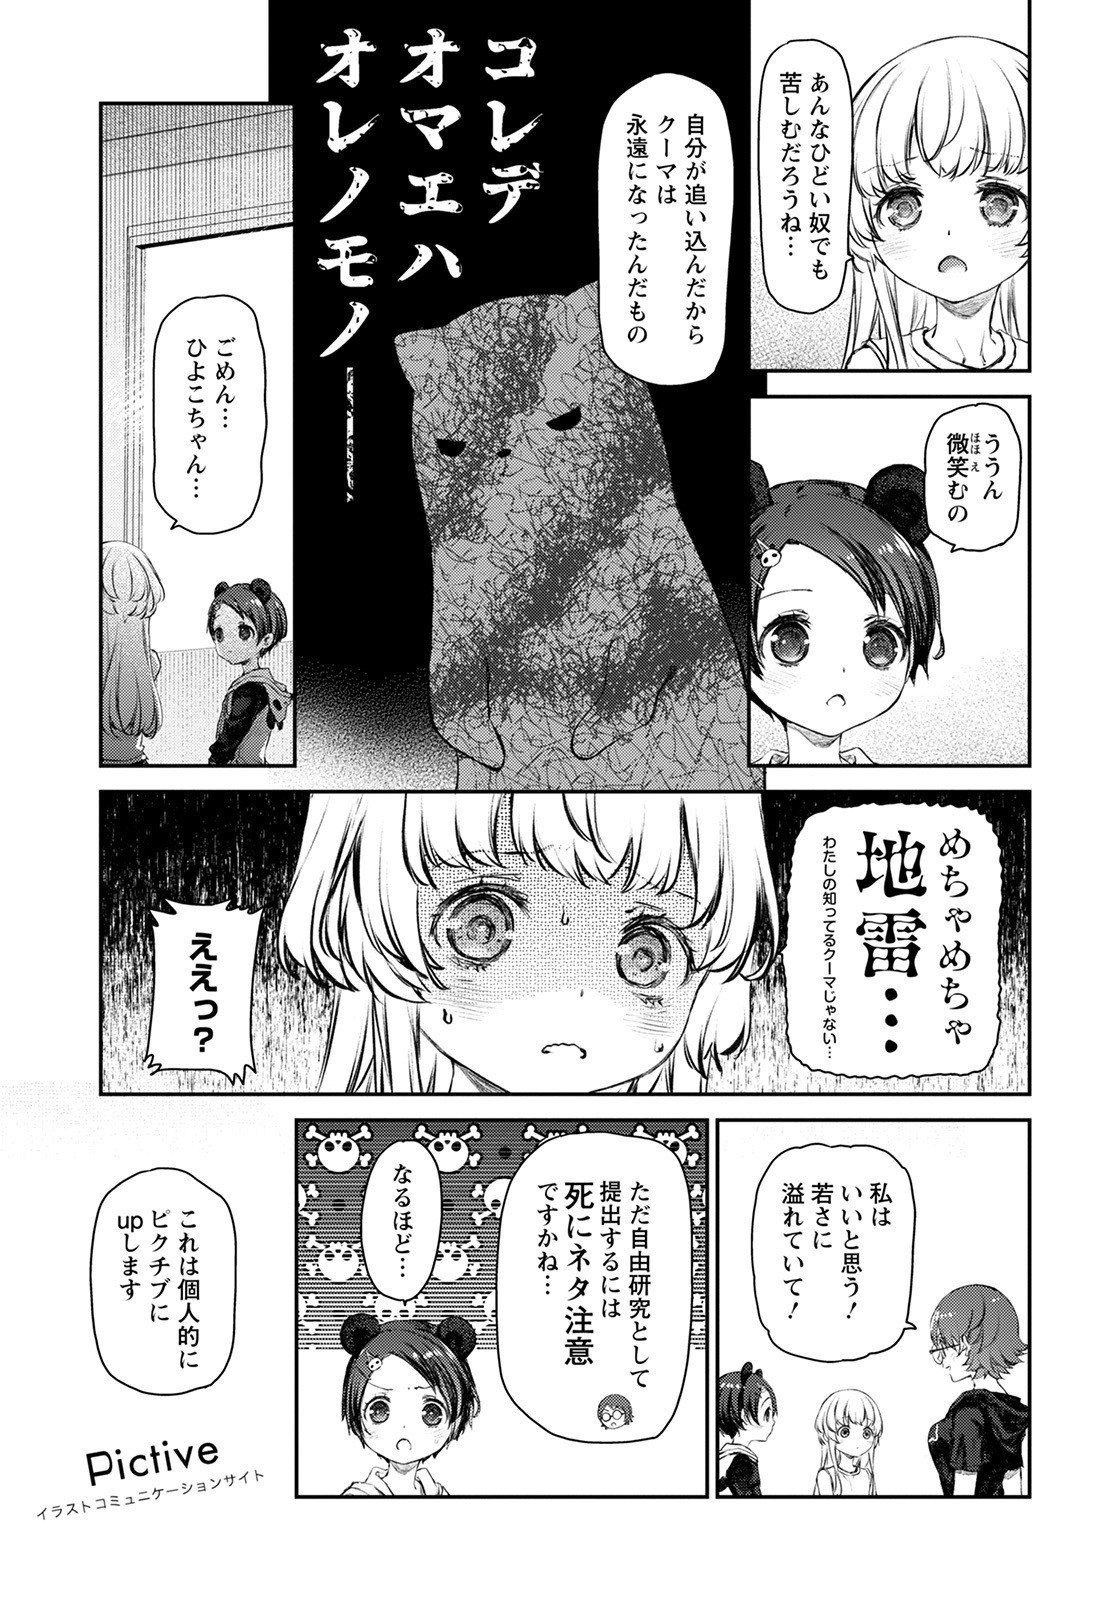 Uchi no Maid ga Uzasugiru! - Chapter 52 - Page 23